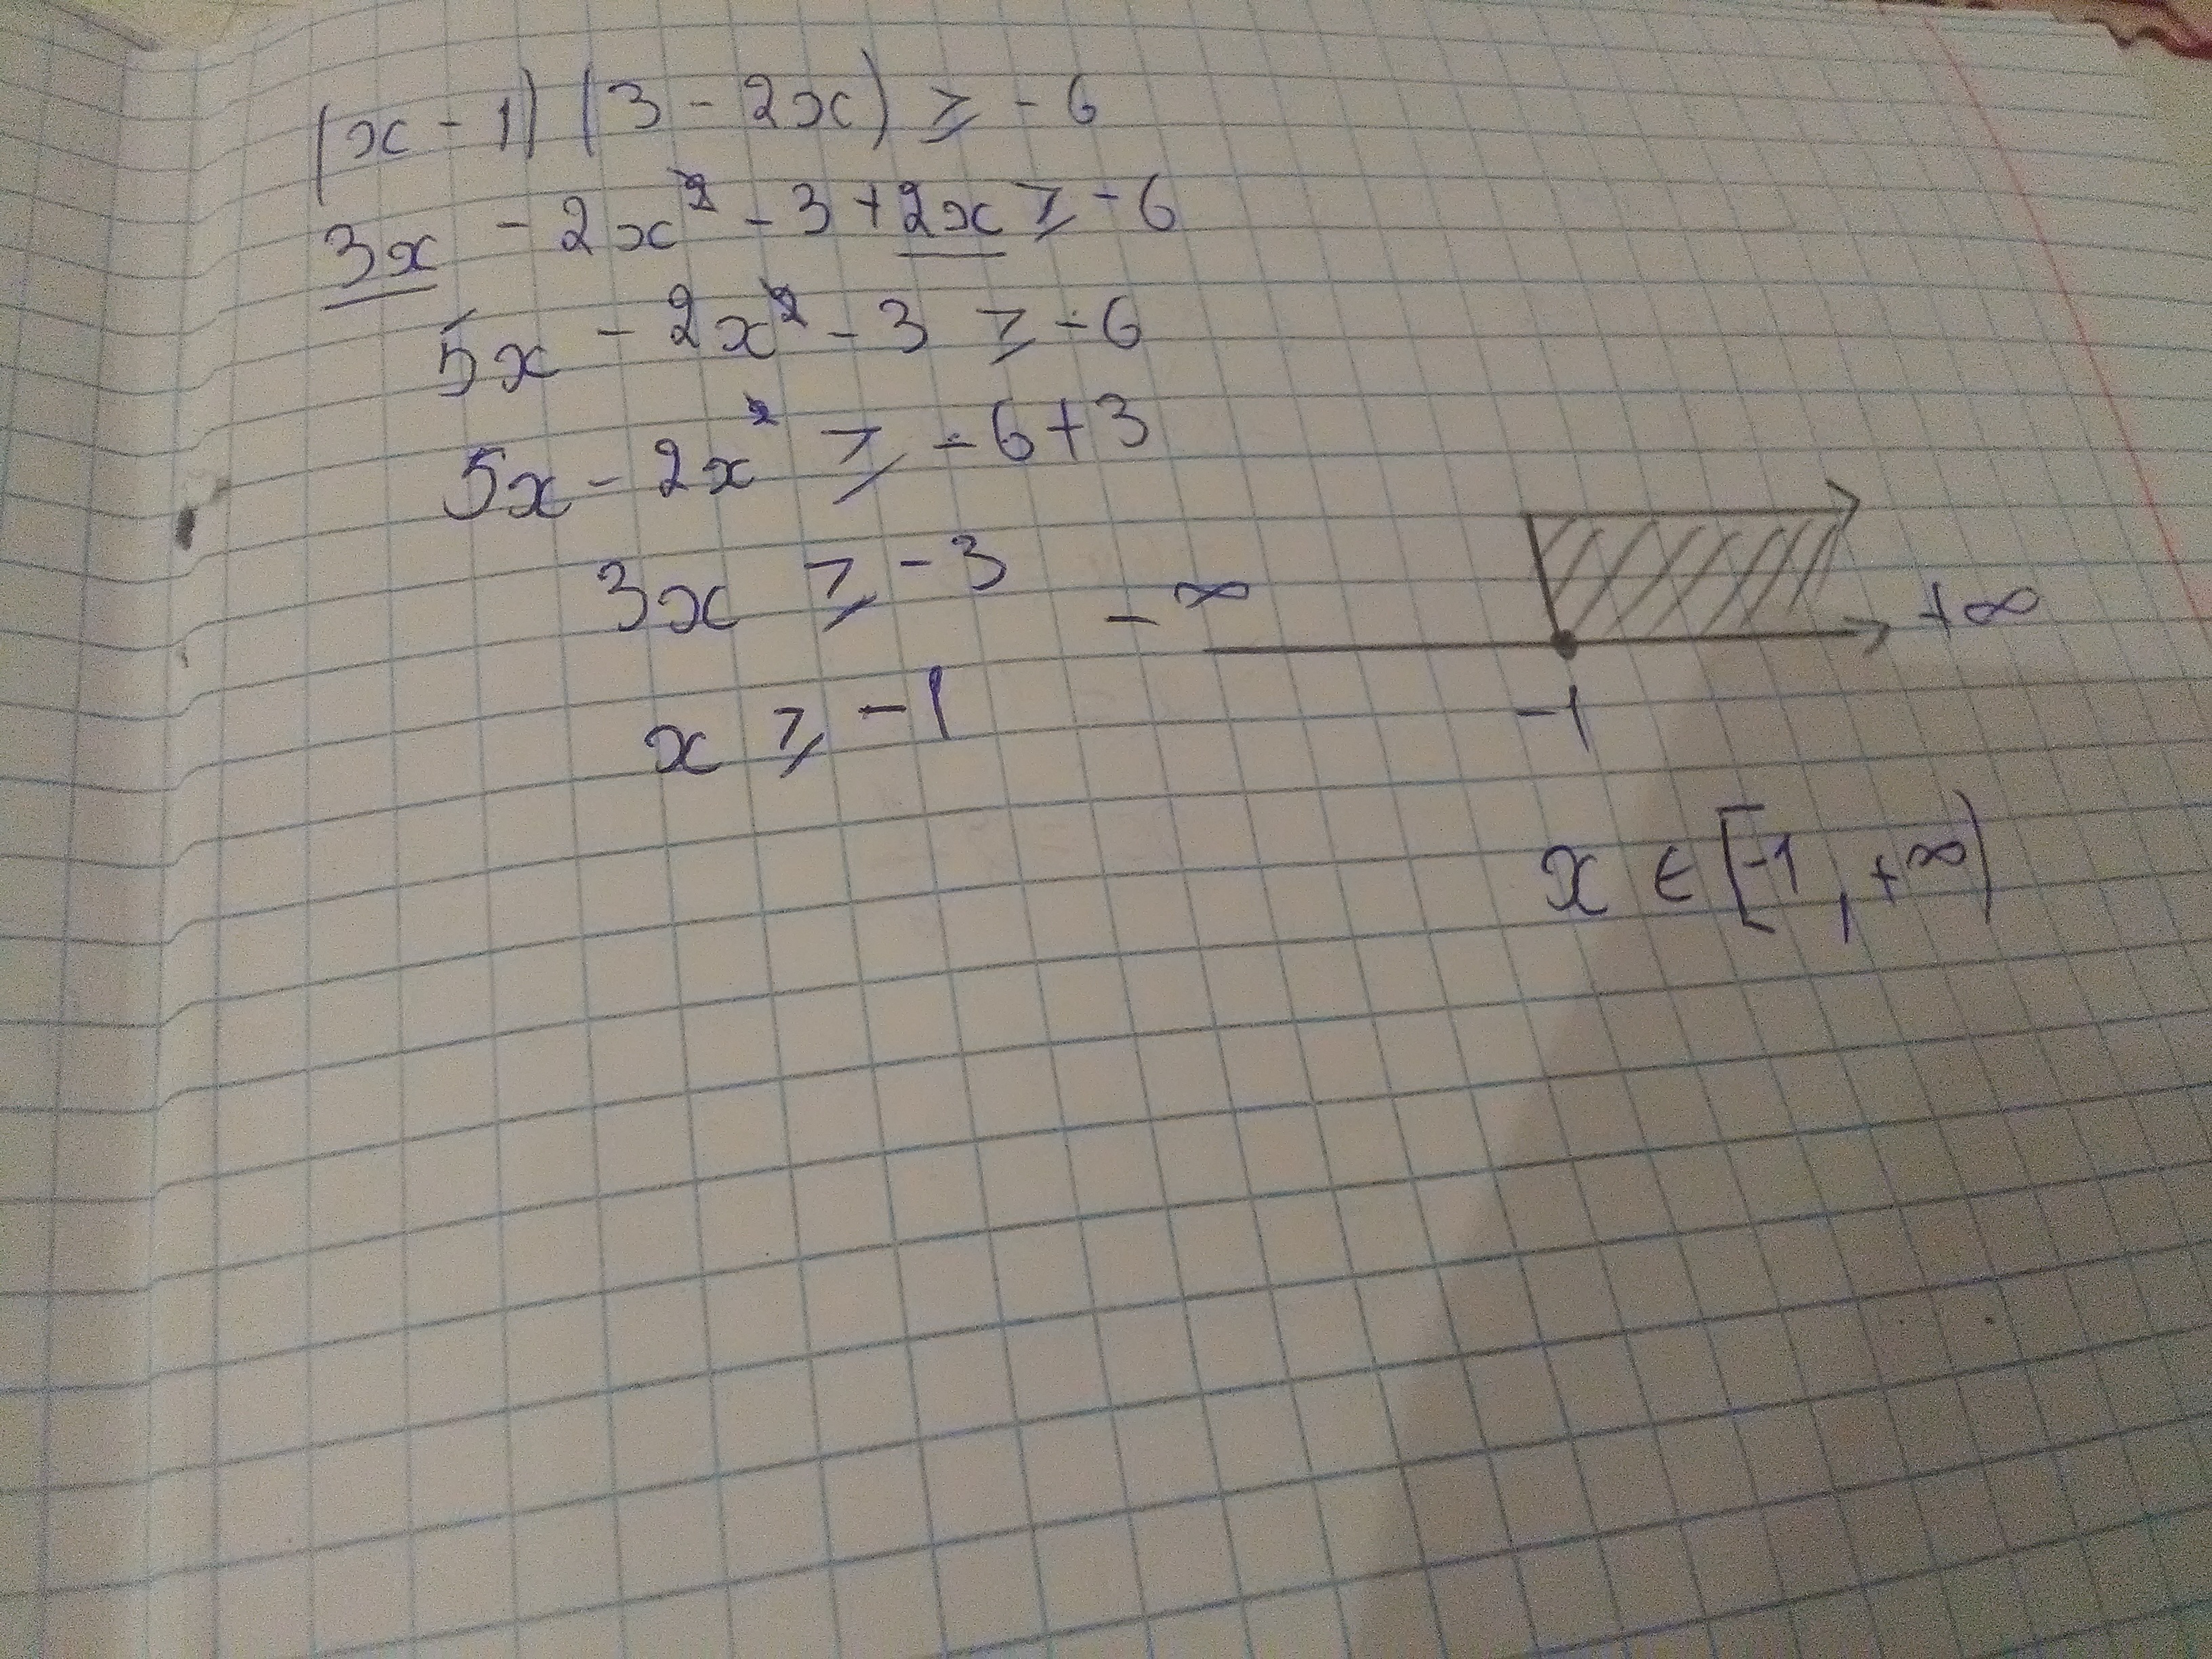 10x 3 2x 6 0. 3x+2x+6x. 1/X+6=2. |X-1|-6/|X-1|<=1. 1/X+6=6/X.